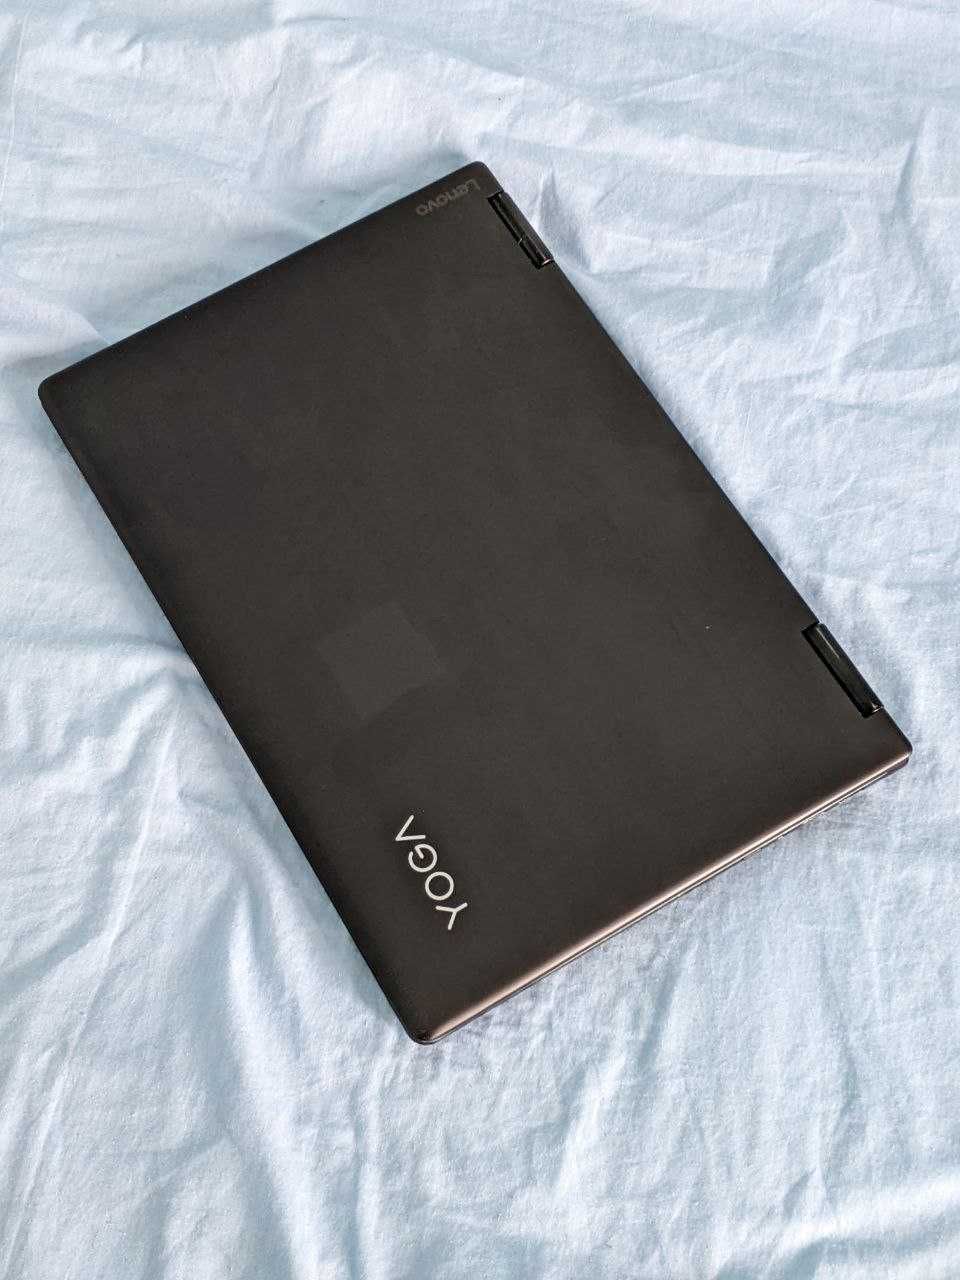 Ноутбук Lenovo Yoga 710 15IKB, CPU i7-7500U, GeForce 940MX 4k